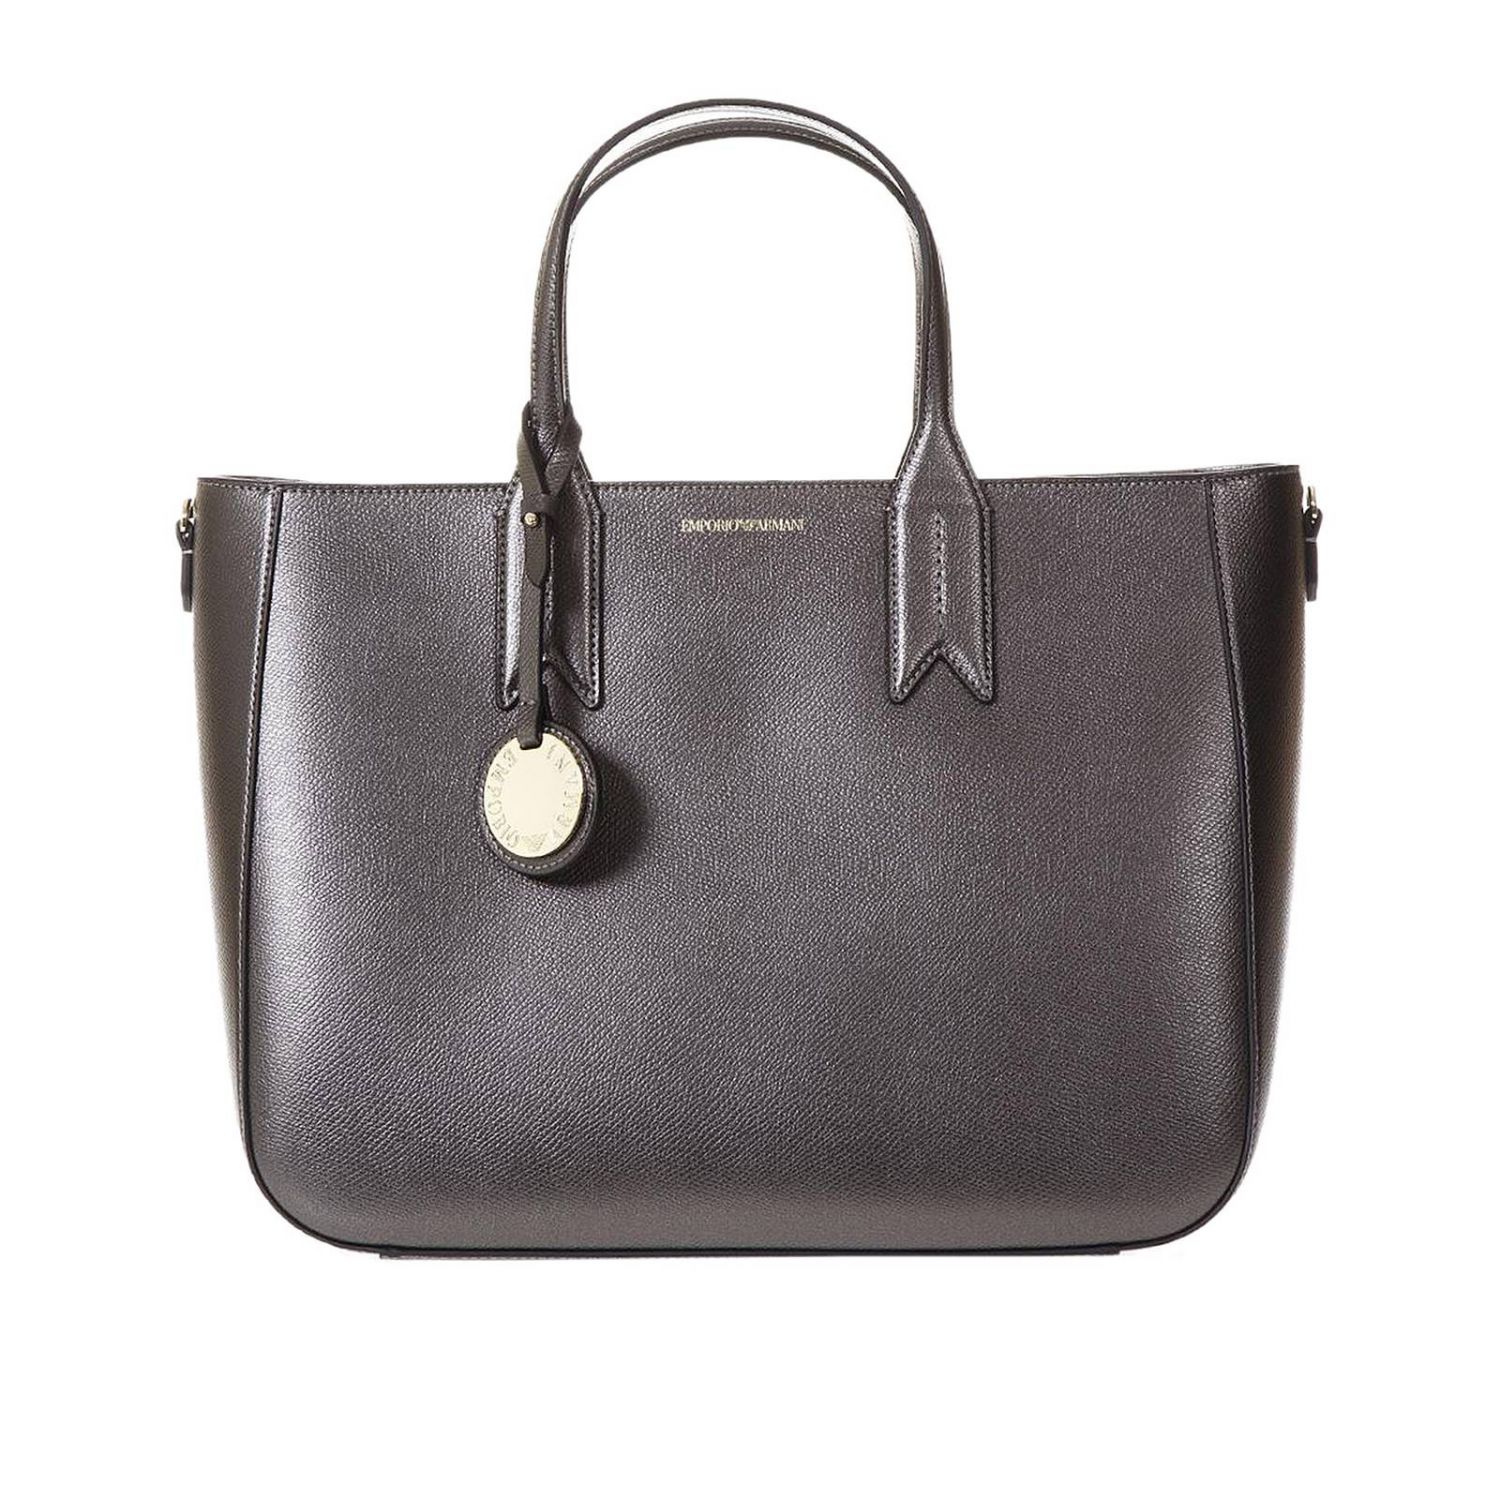 Emporio Armani Outlet: Shoulder bag women - Charcoal | Handbag Emporio ...